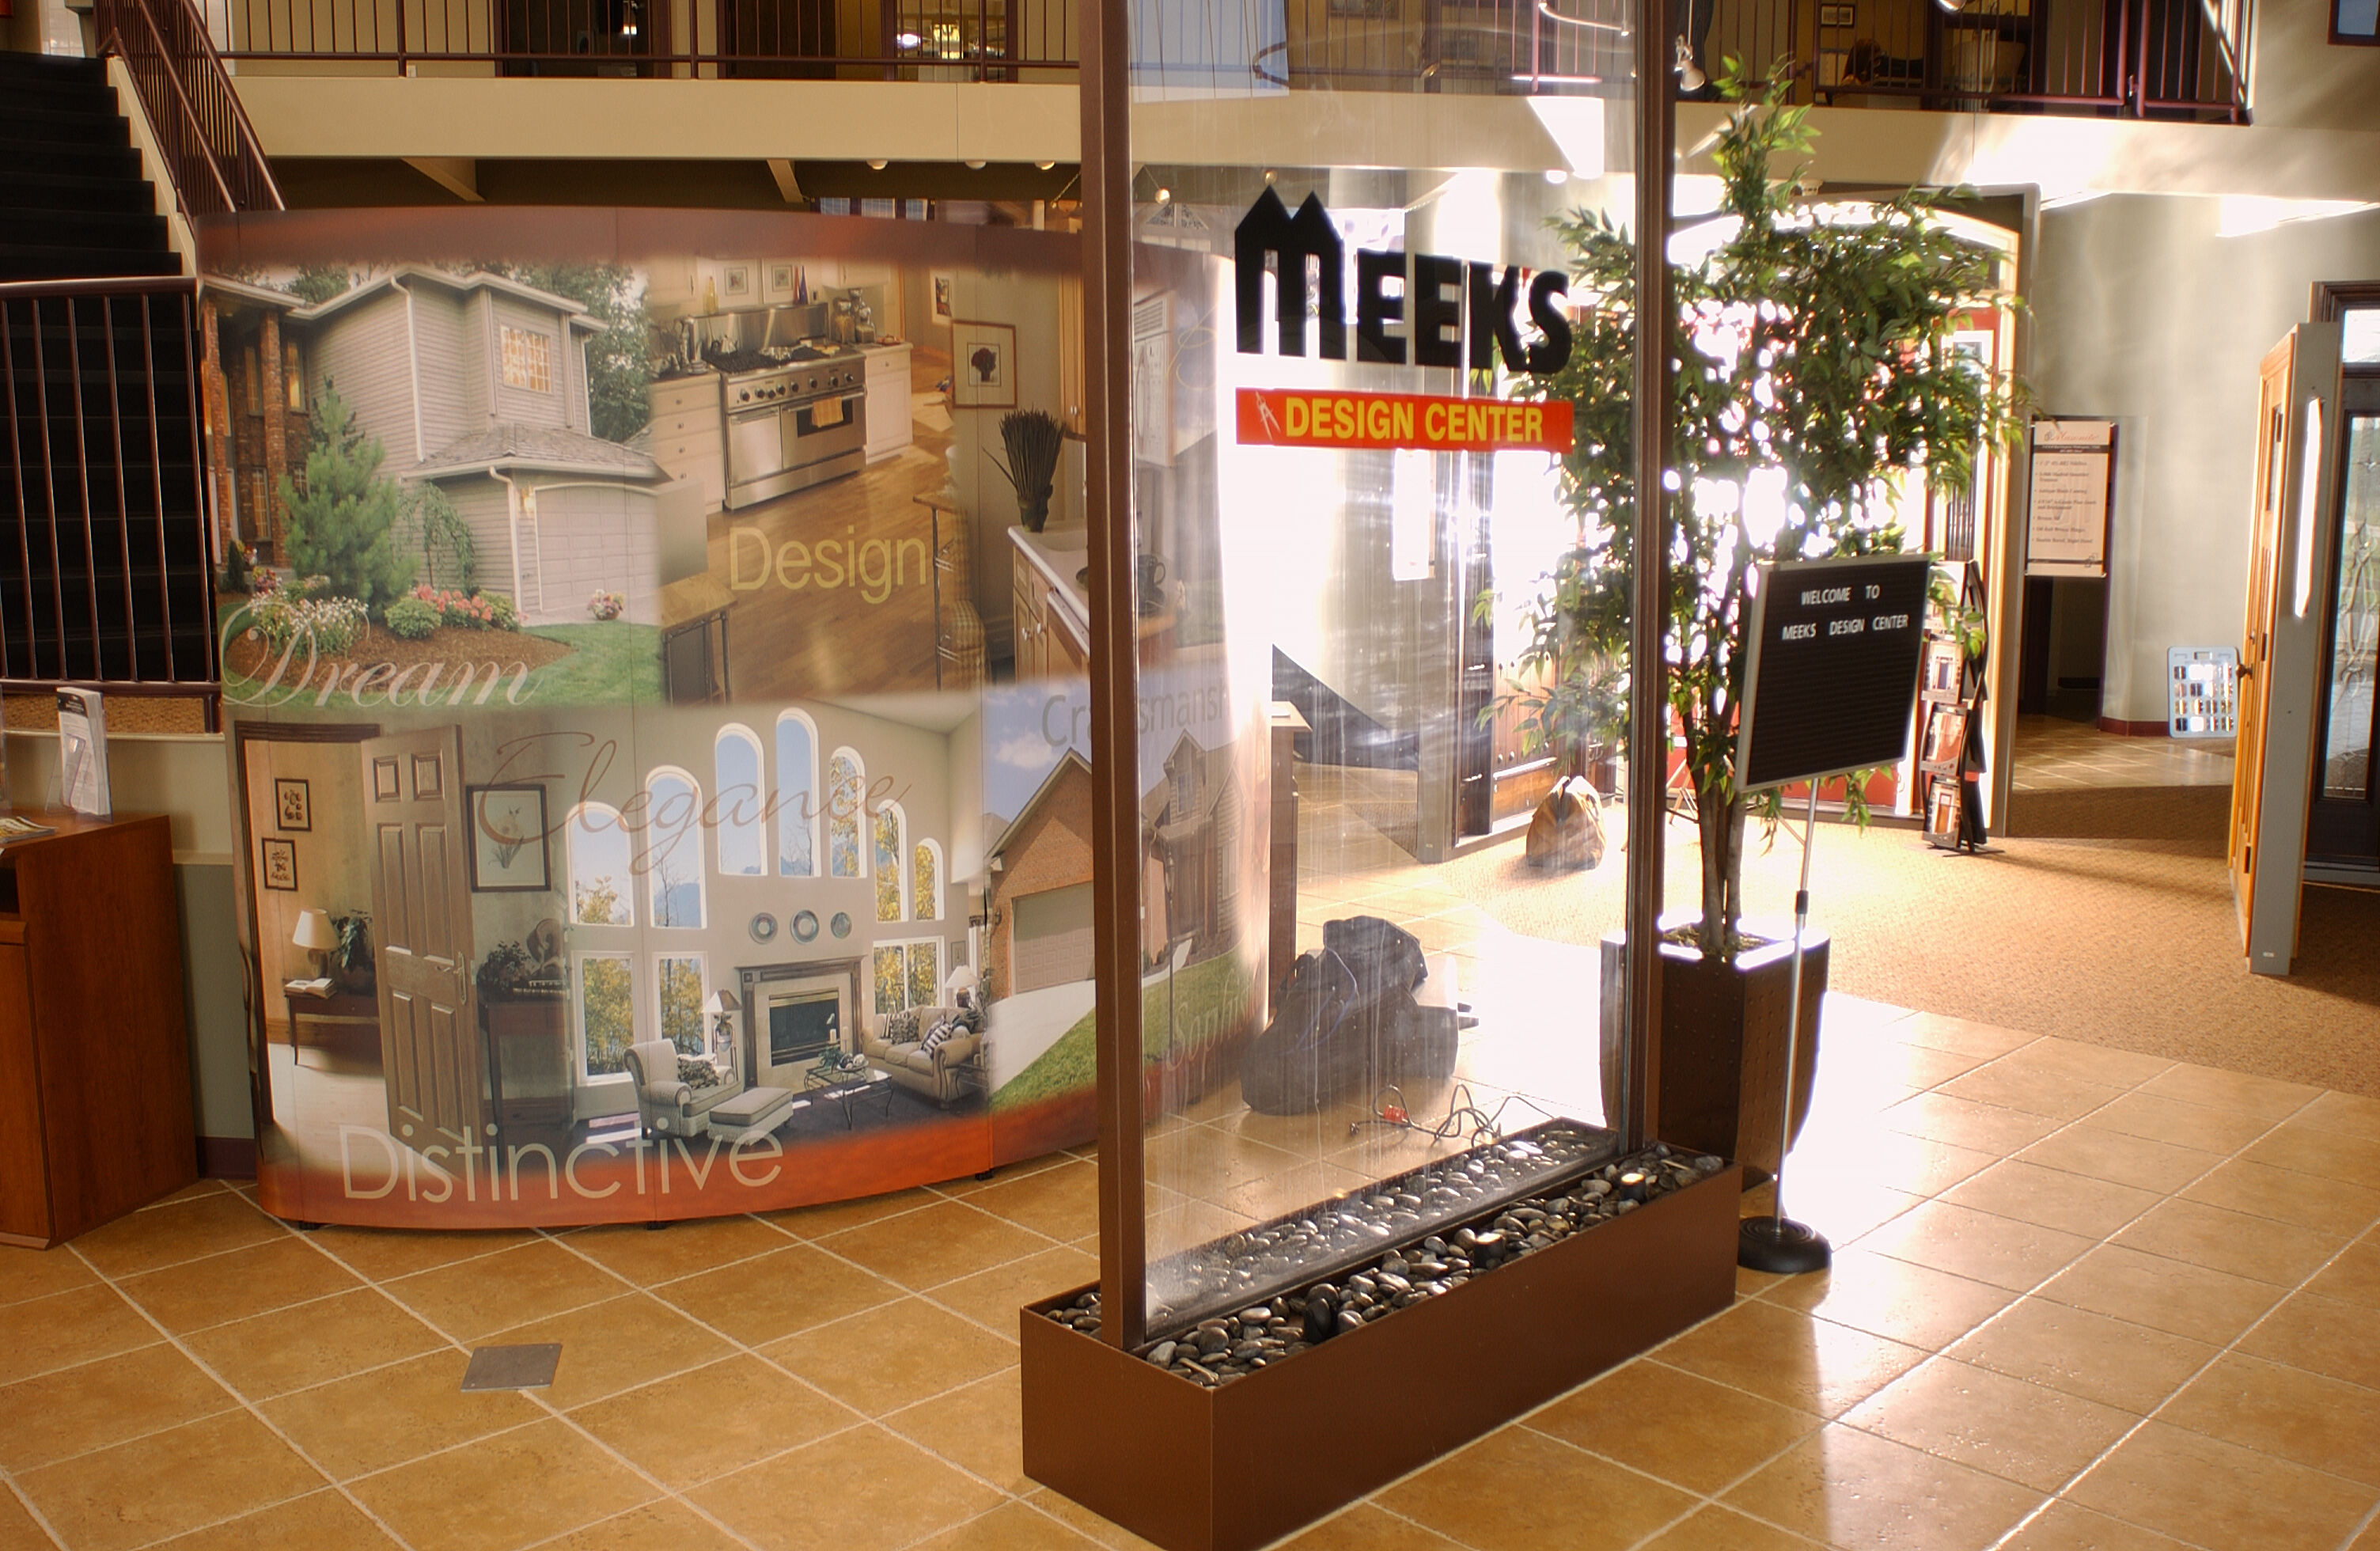 Meek's Design Center - Springfield, MO Photo